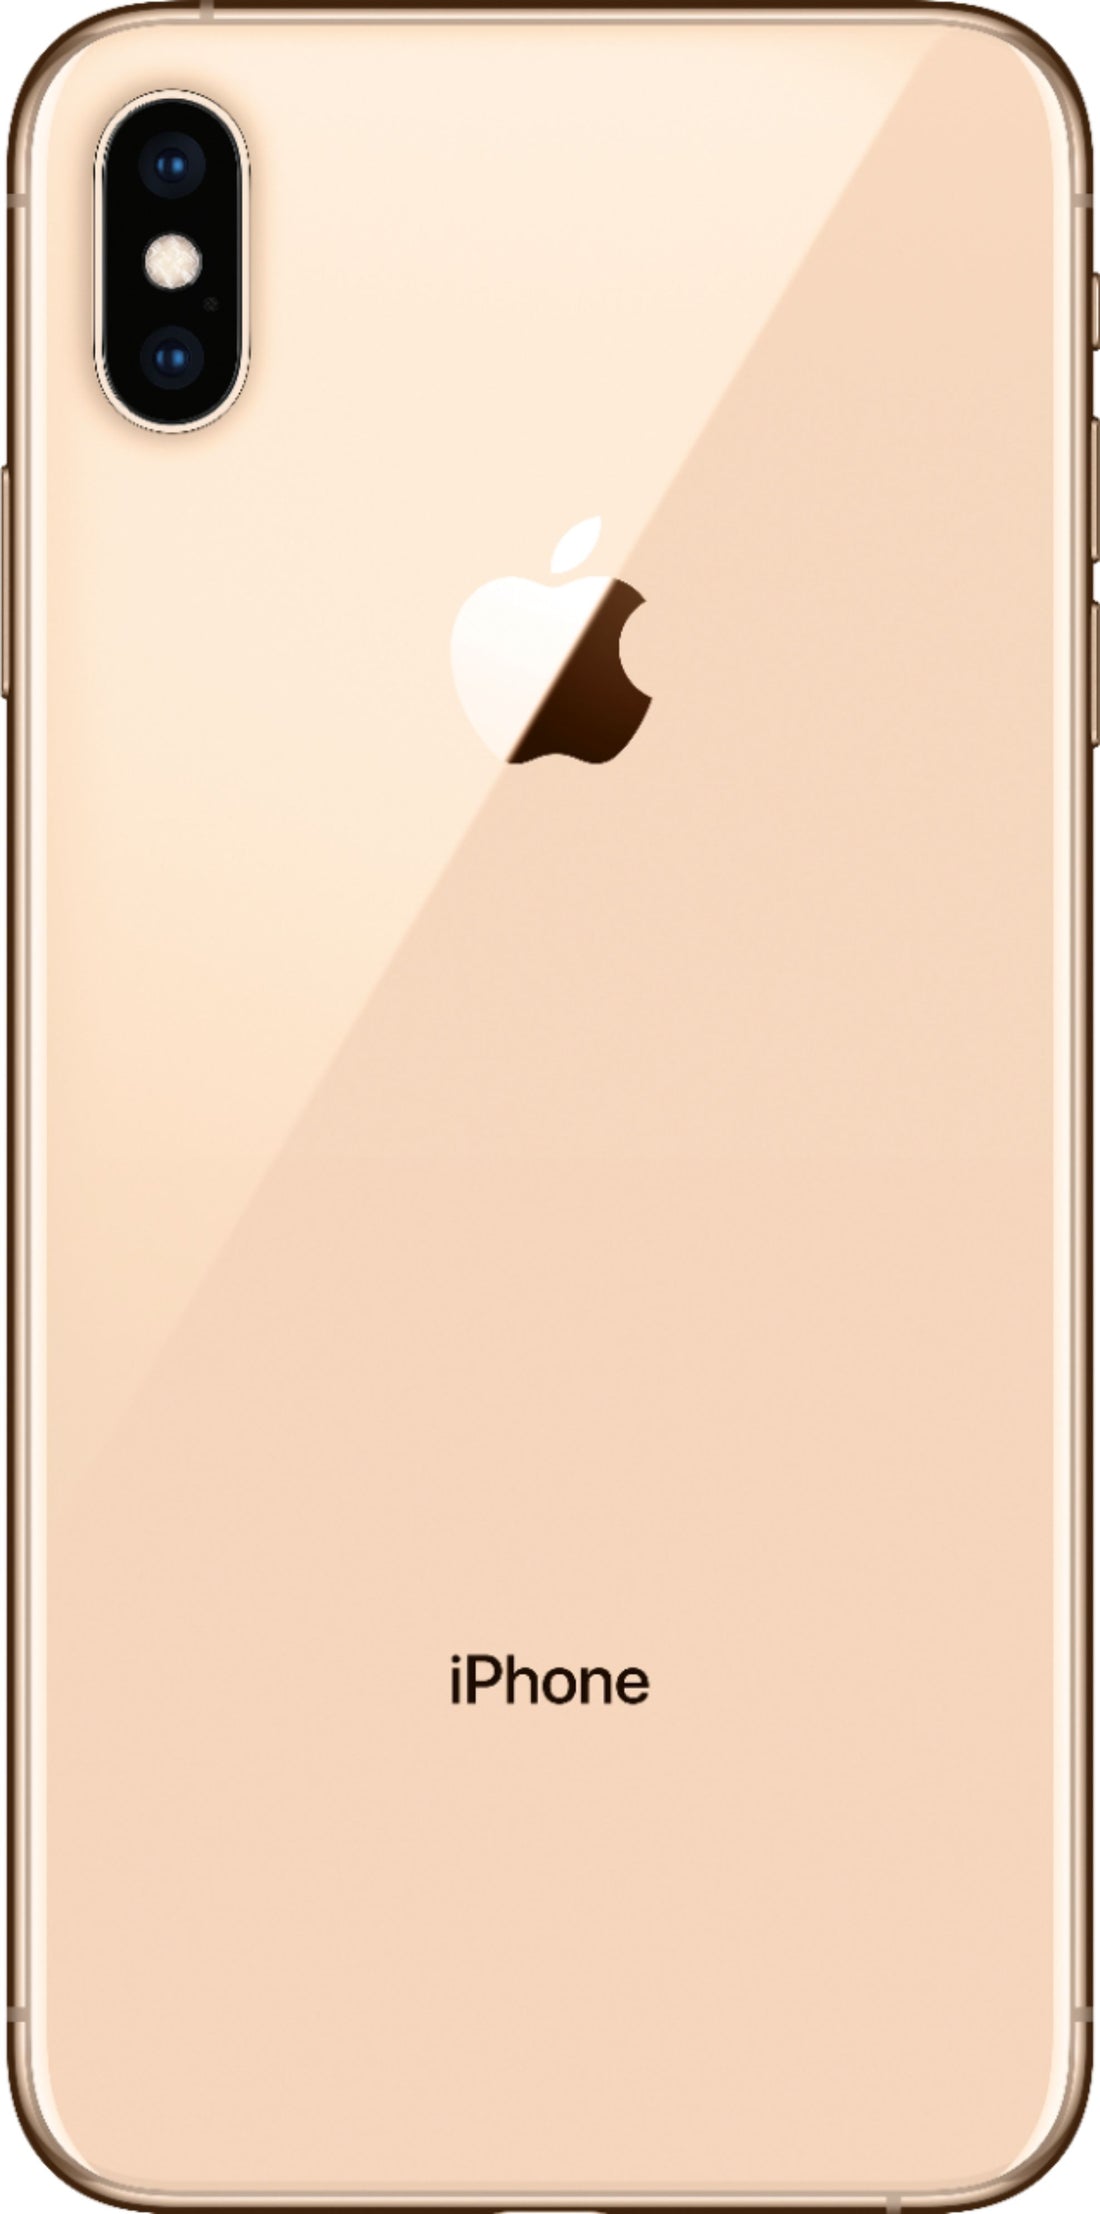 Apple iPhone XS Max 256GB (Unlocked) - Gold (Refurbished)